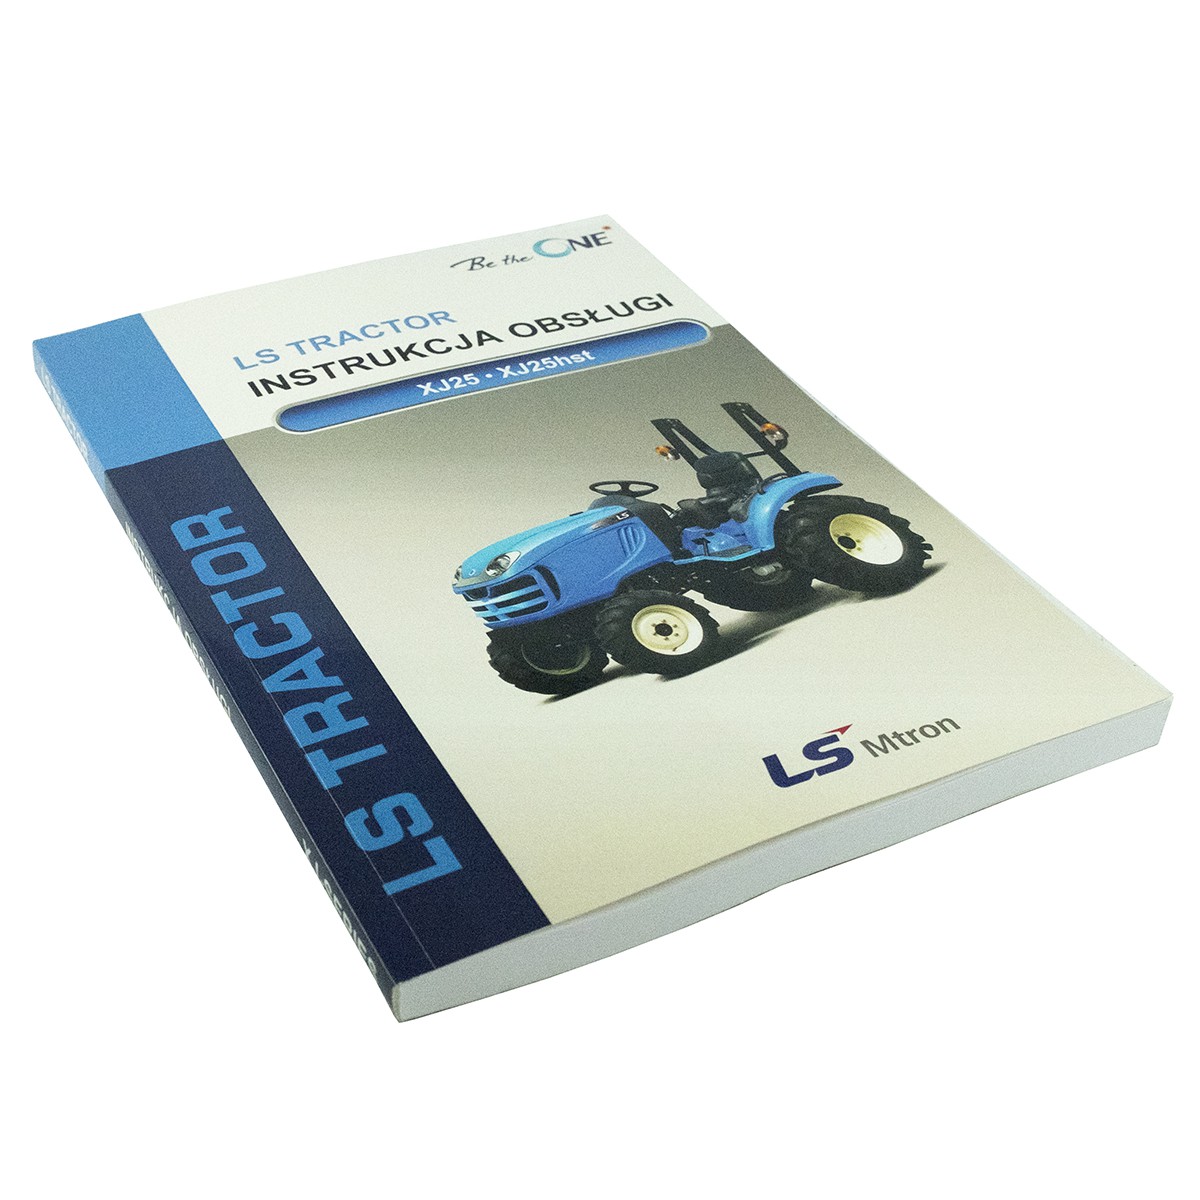 LS Tractor XJ25 / LS Tractor XJ25 HST tractor manual